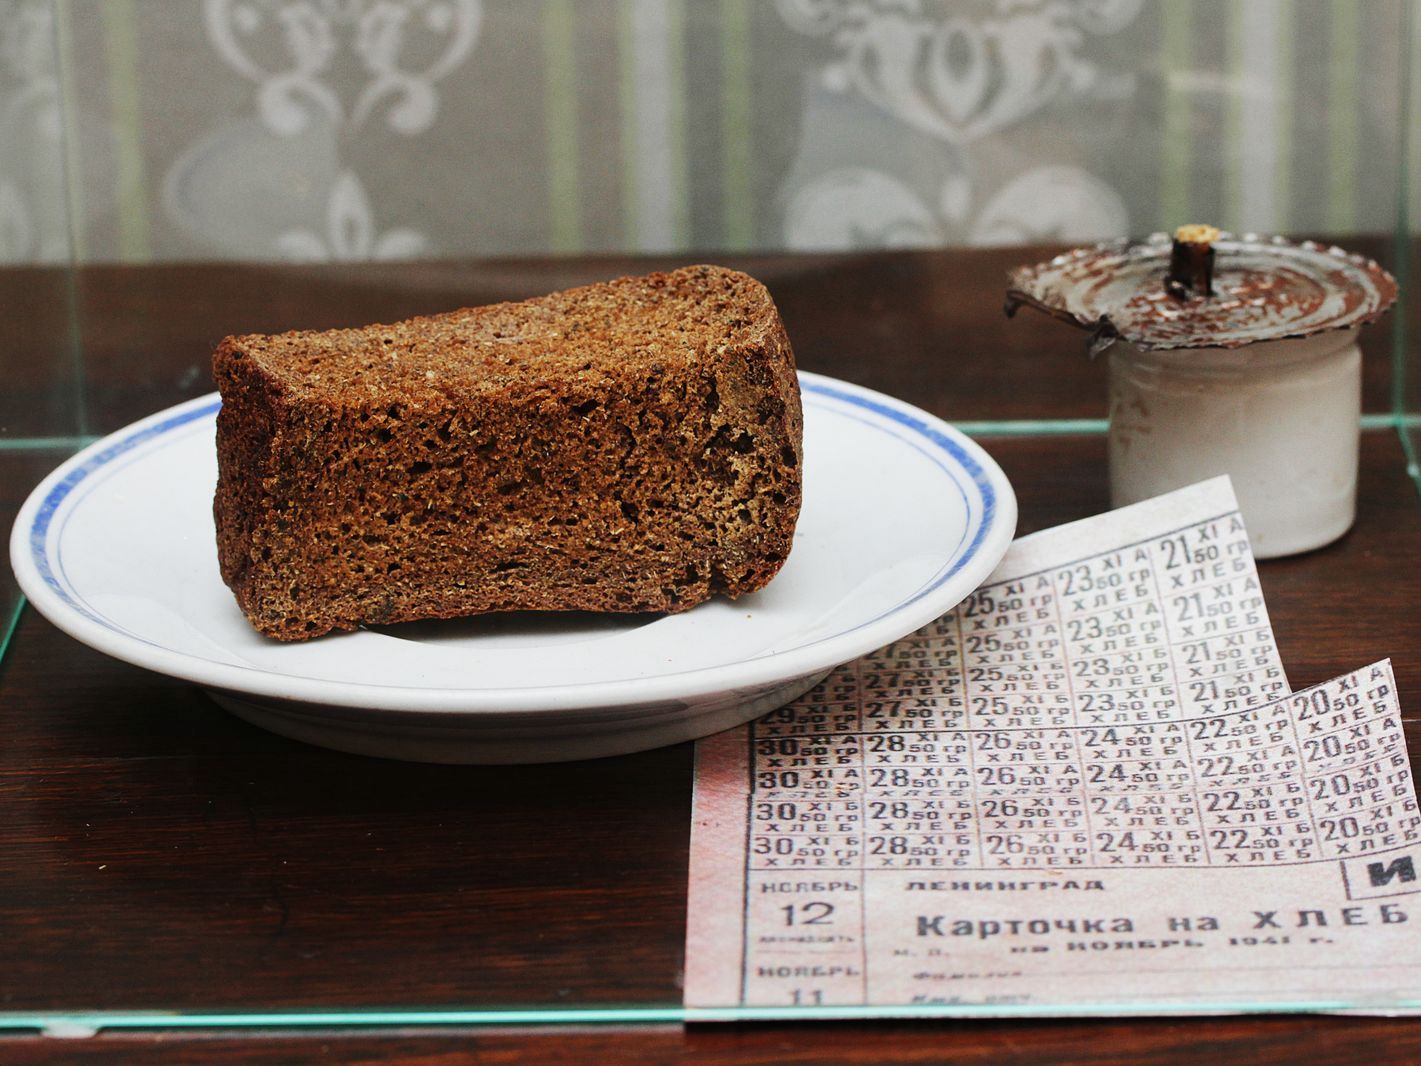 872 дня истории. Экскурсия с посещением Музея хлеба (QR-код или ПЦР-тест)
